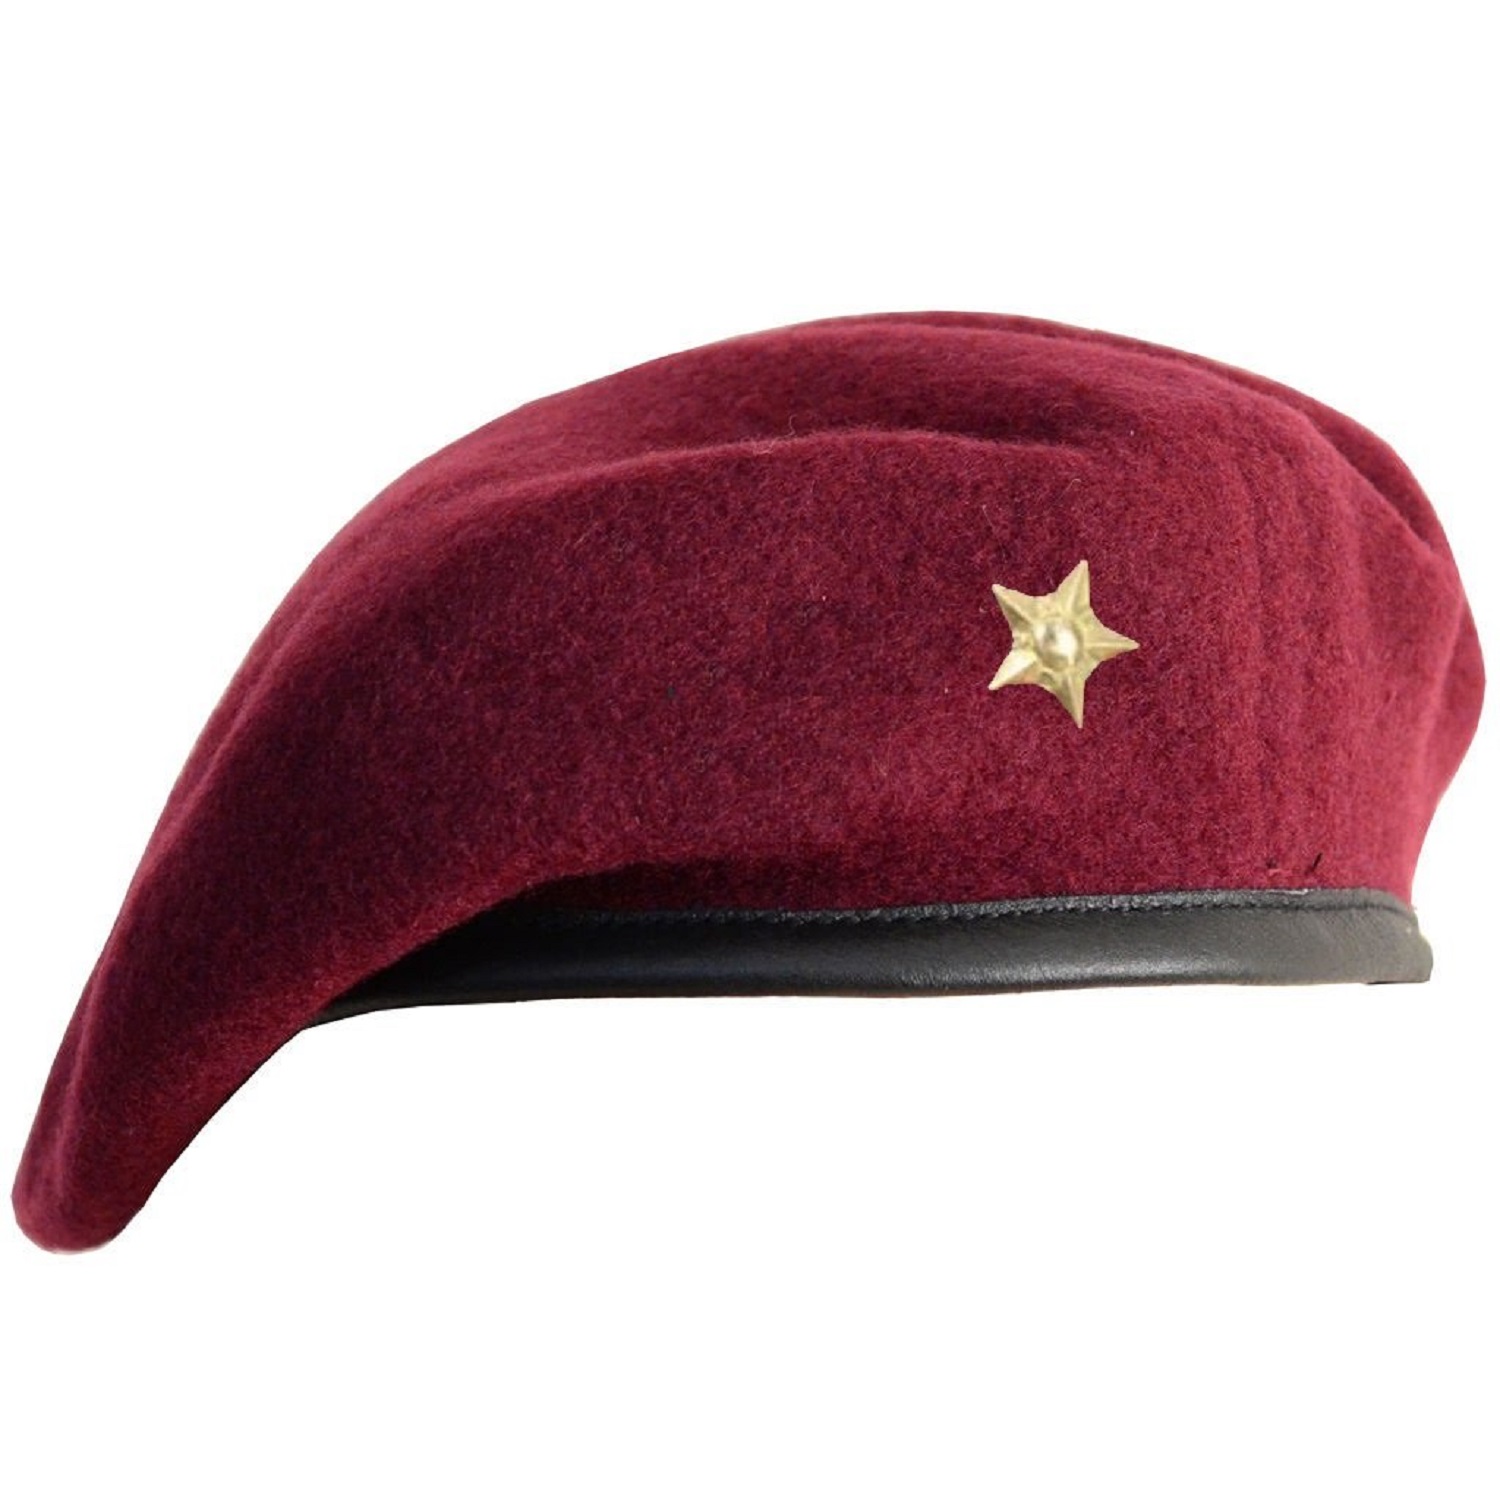 Unisex French Woolen Beret Cap, Rajputana Cap, Traditional Army Style Cap, Classic European Hat, Woolen Beret Cap, Che G